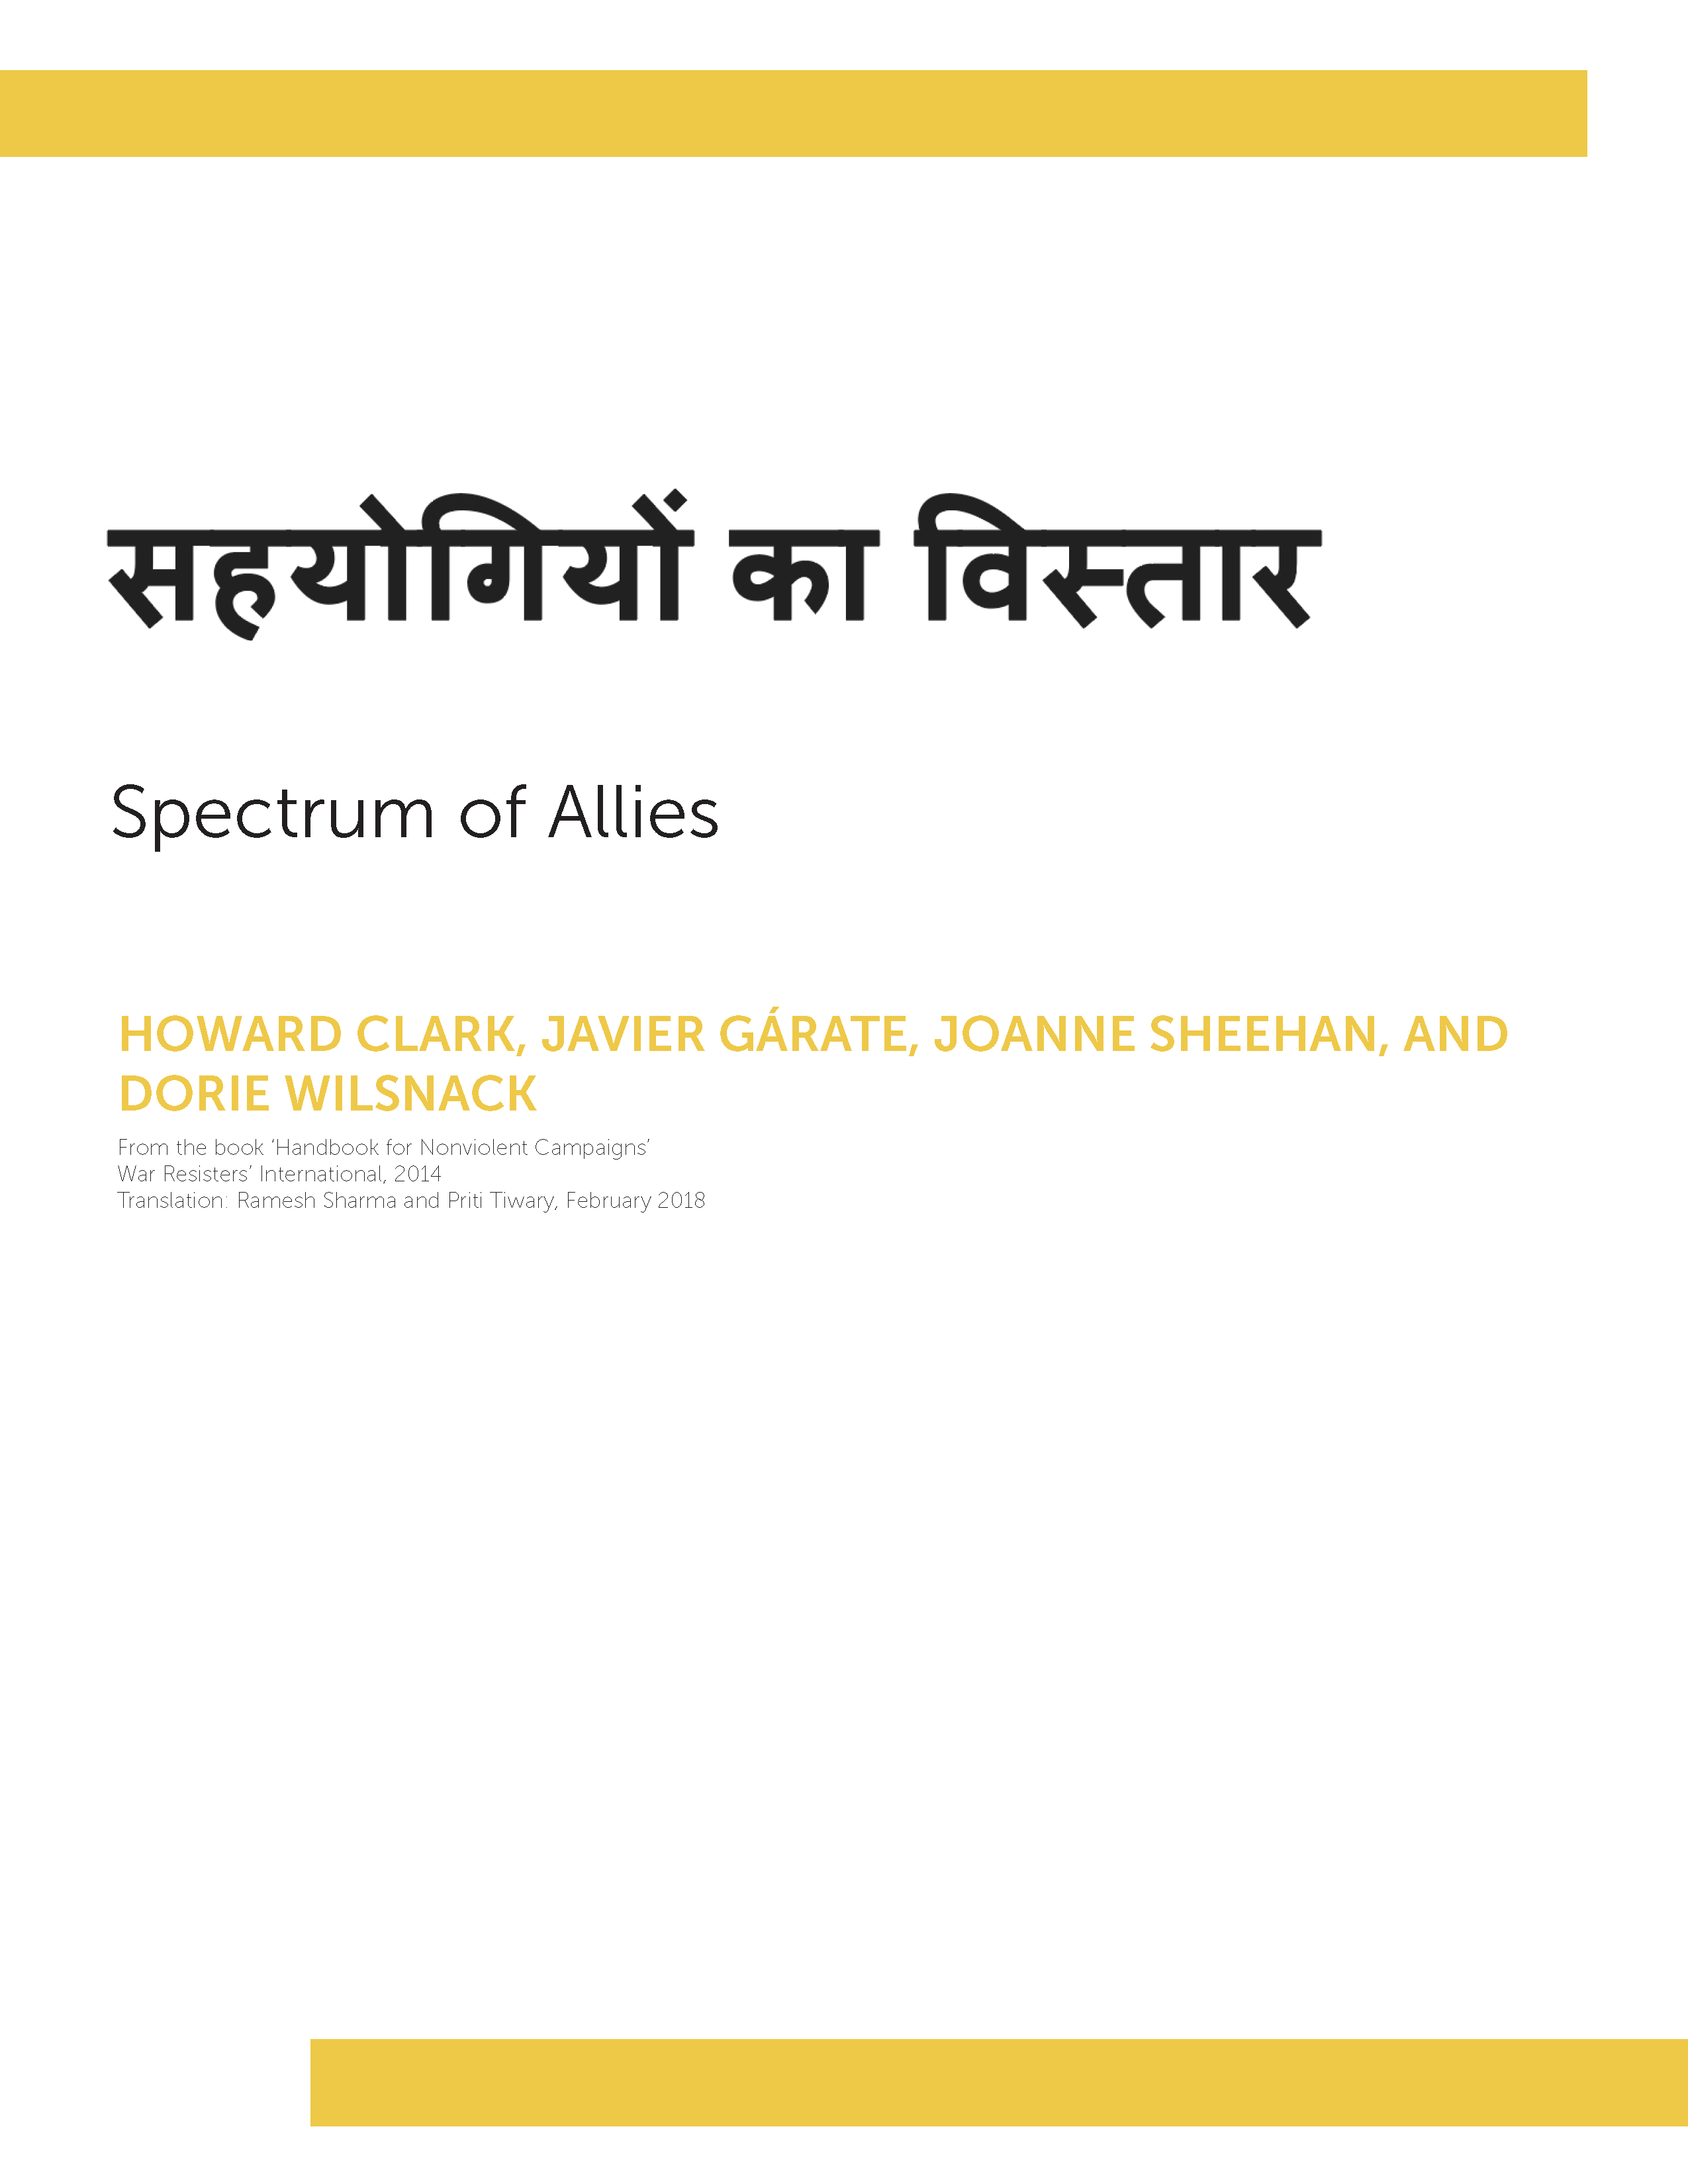 Spectrum of Allies (Hindi)